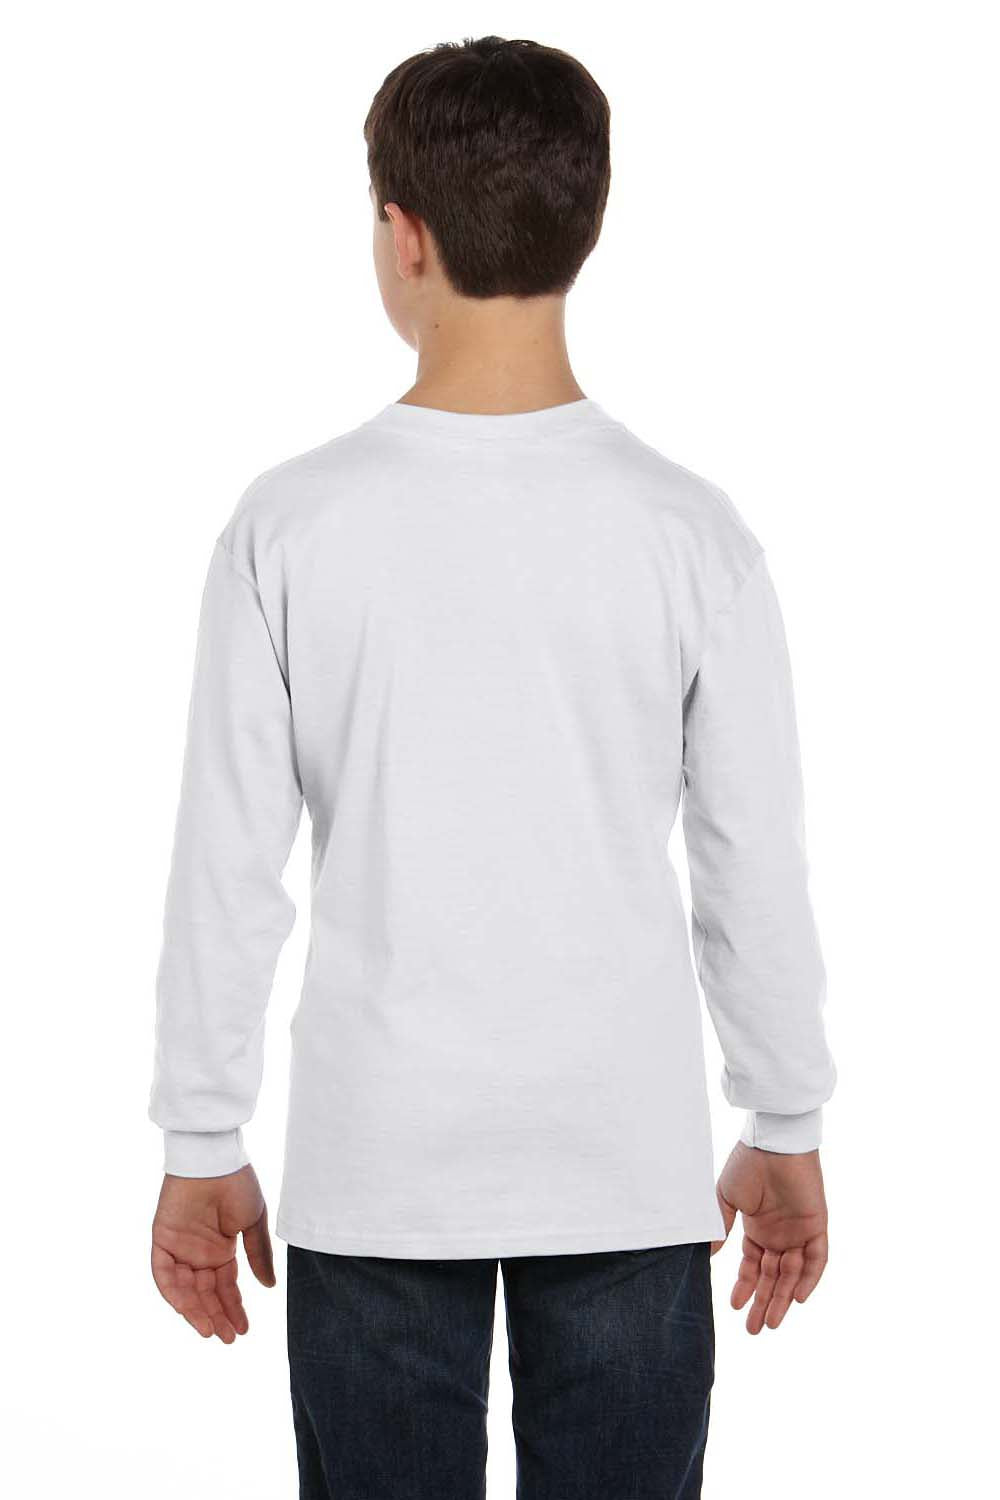 Hanes 5546 Youth ComfortSoft Long Sleeve Crewneck T-Shirt White Back